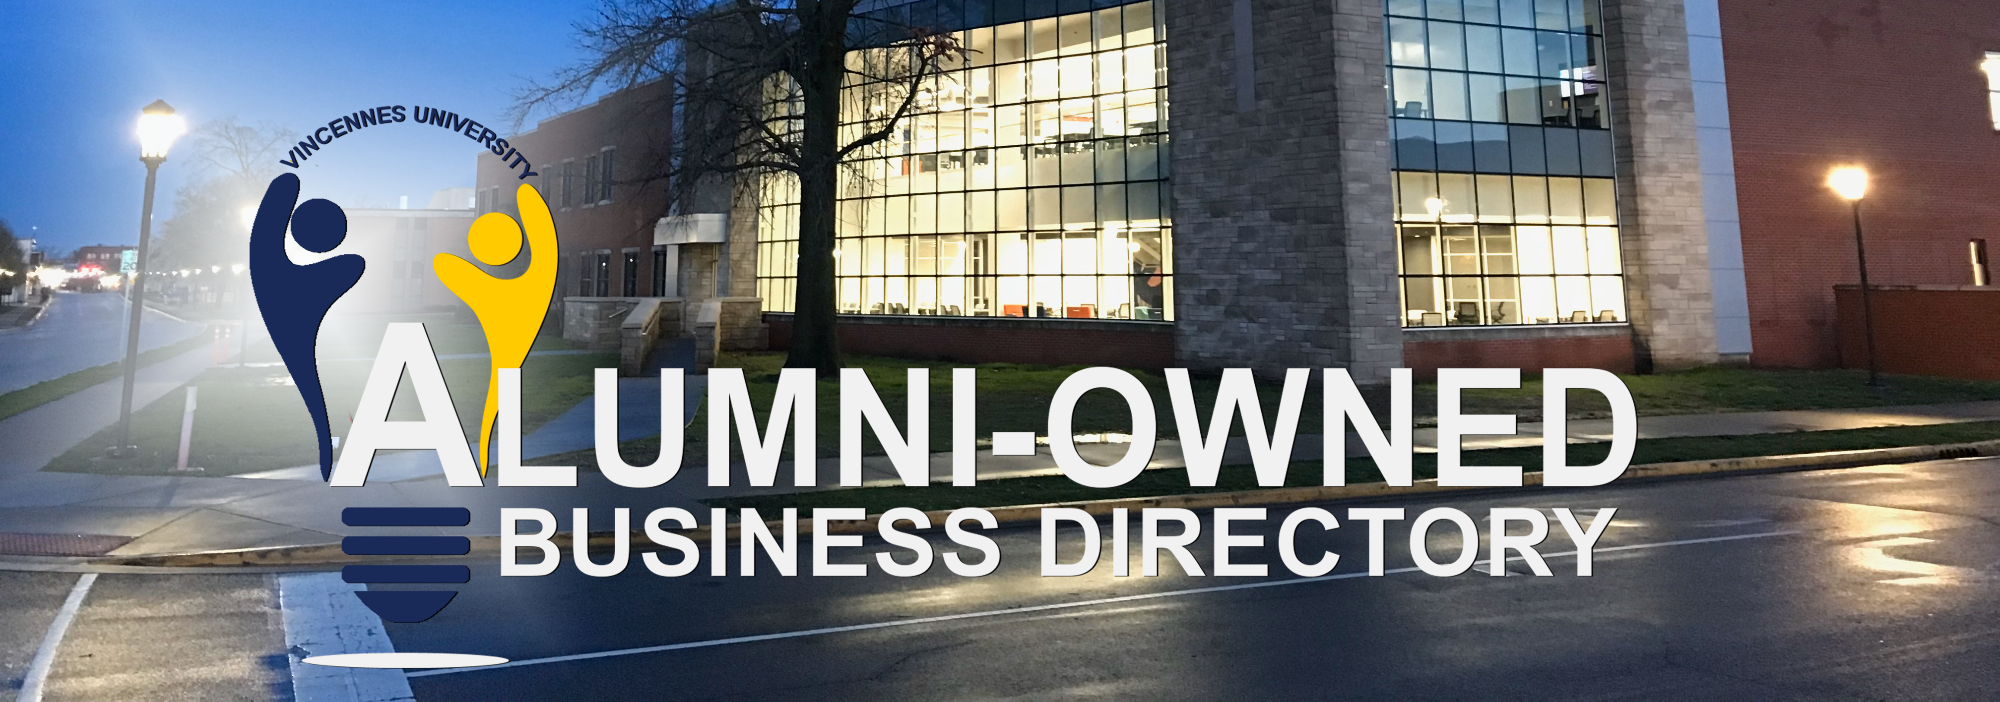 VU Alumni Owned Business Directory